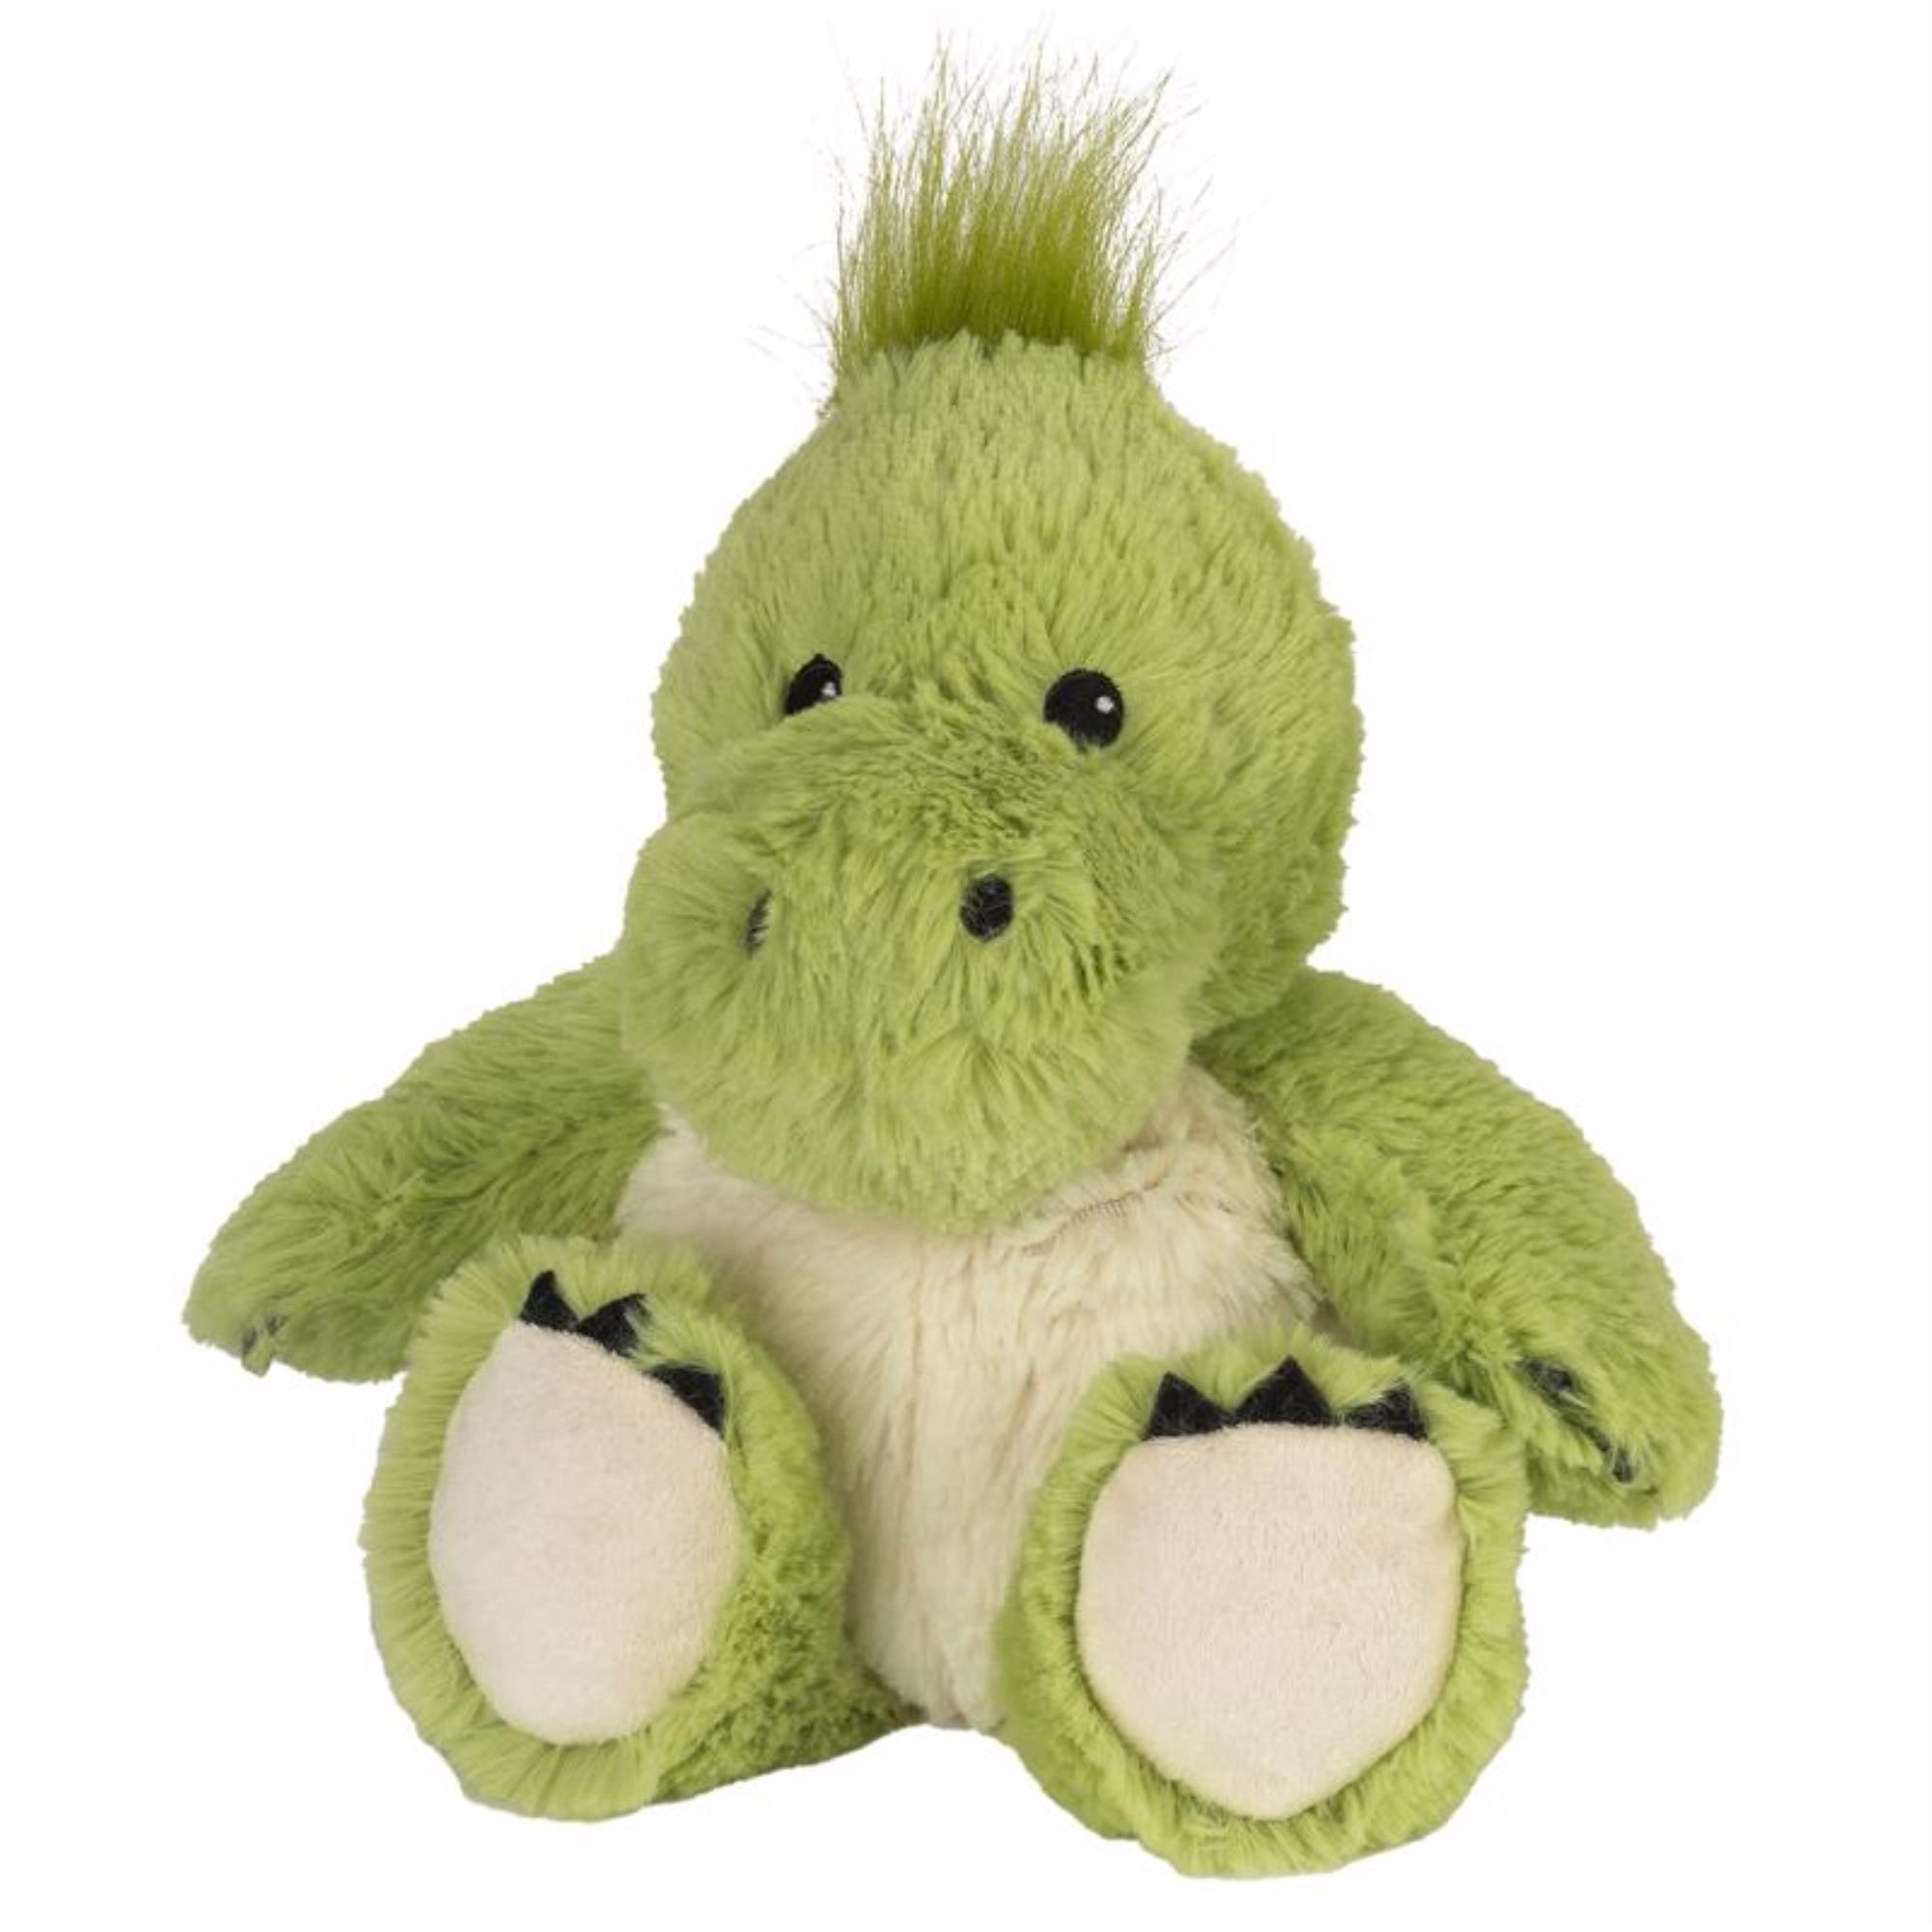 Picture of Warmies 6050636 Plush Stuffed Animal, Green